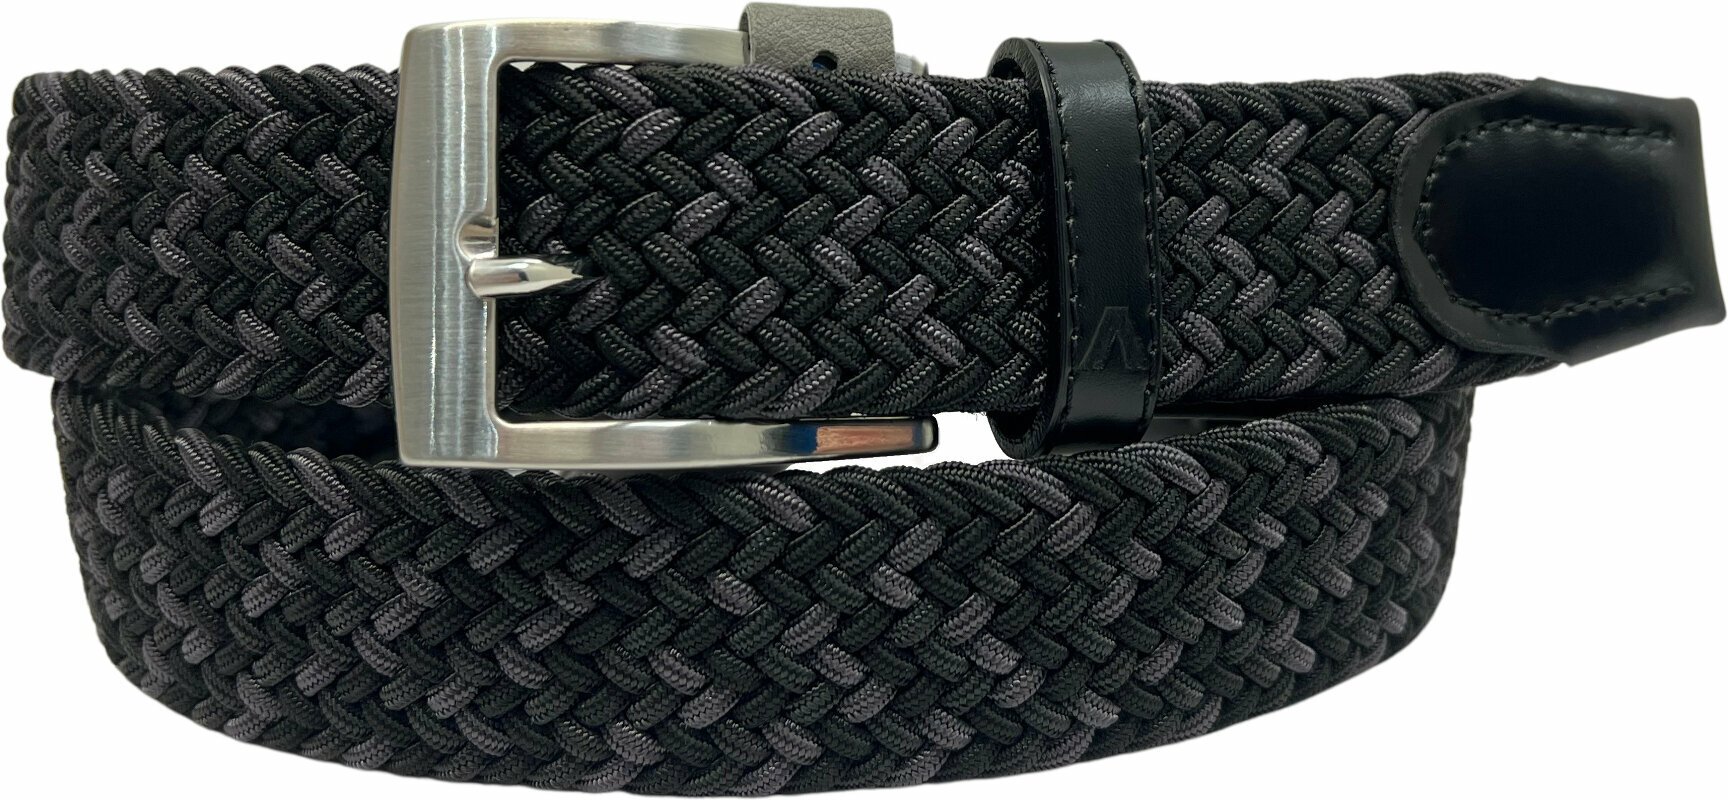 Remen Alberto Gürtel Multicolor Braided Belt Black/Grey 100